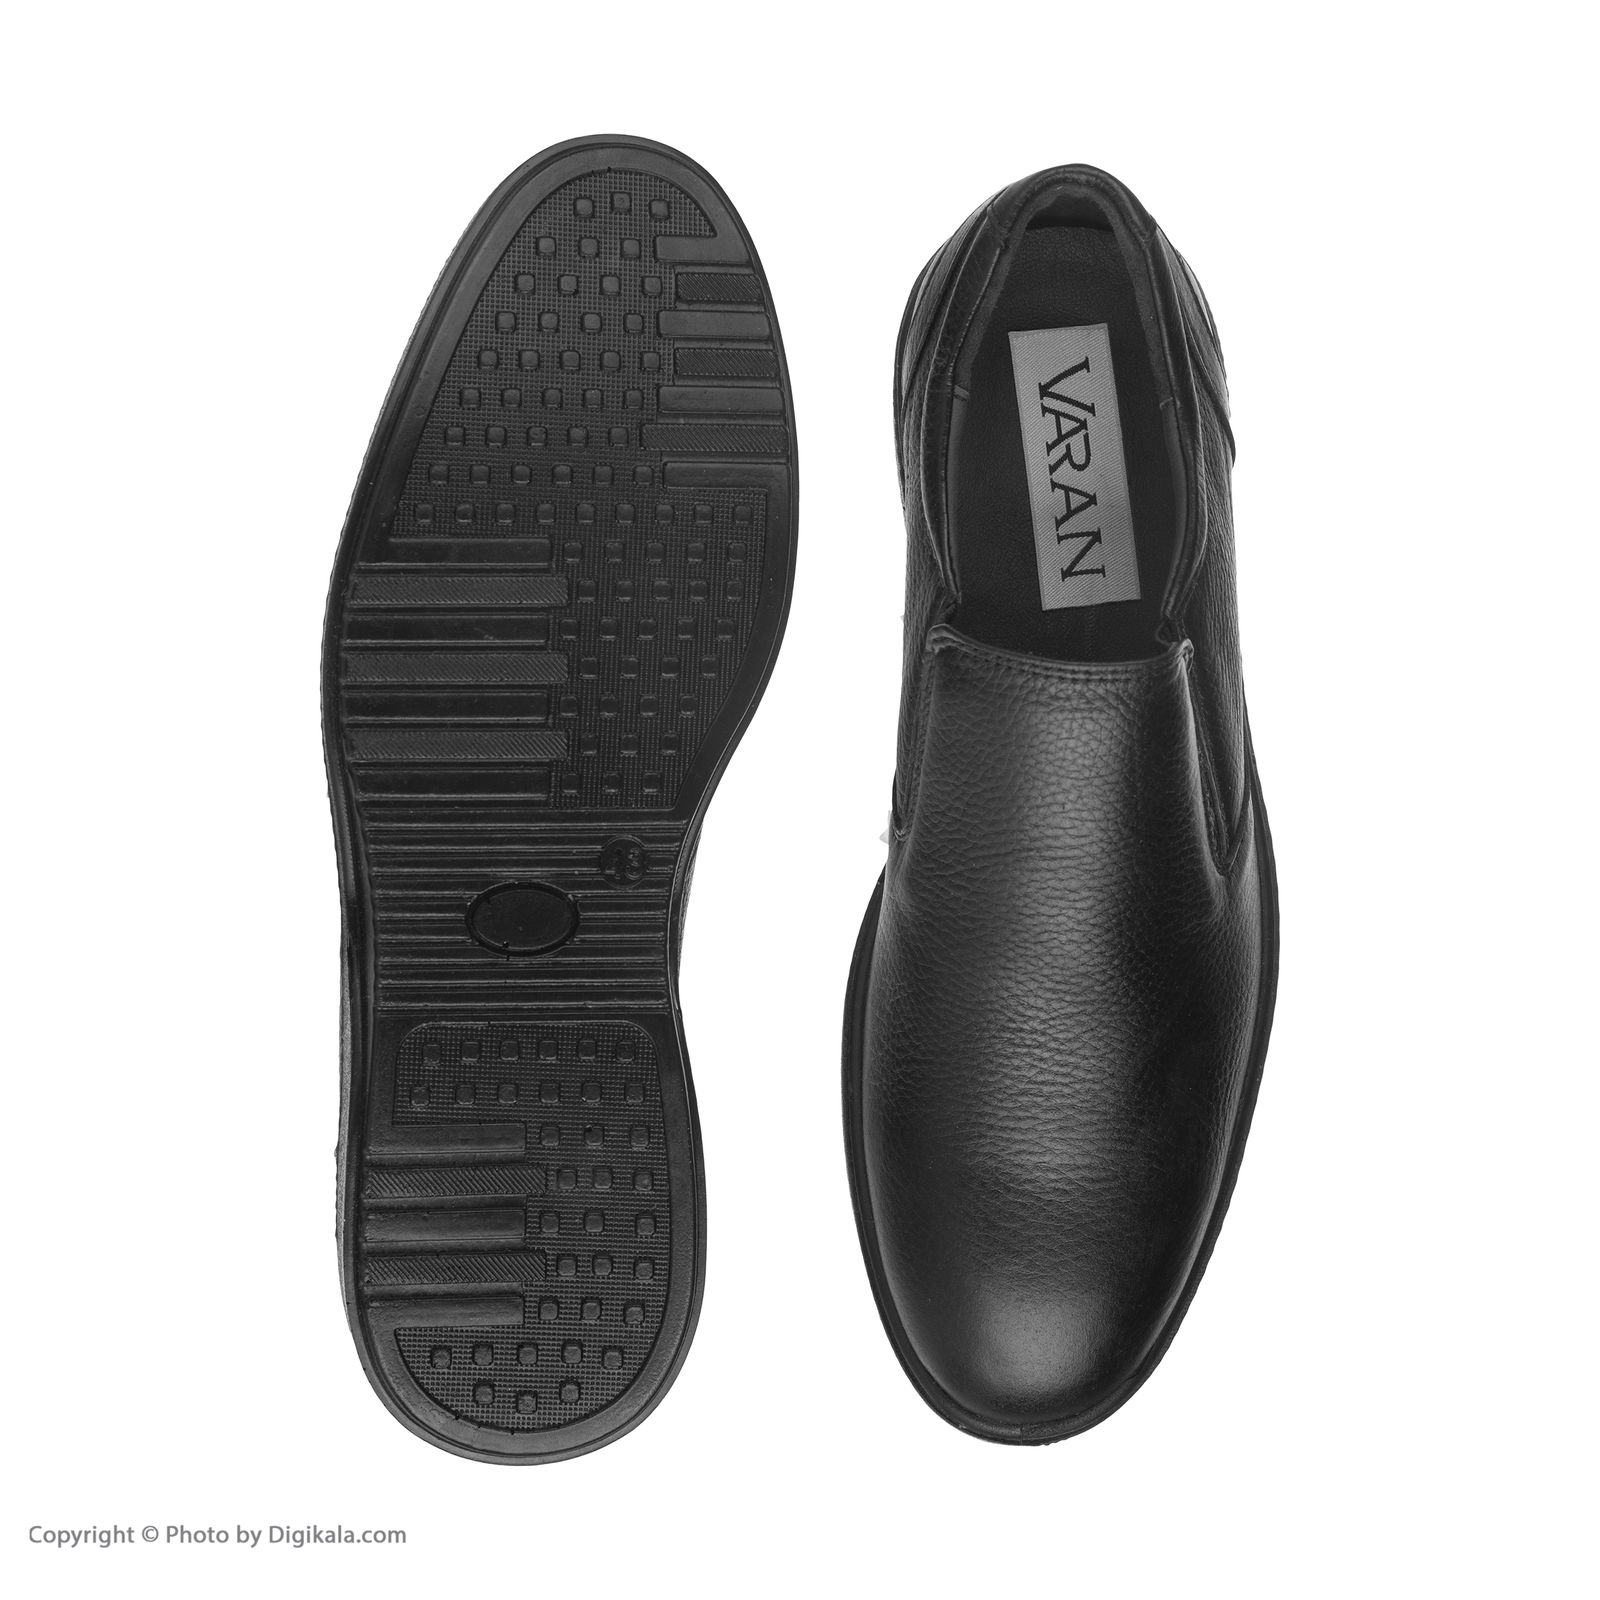  کفش روزمره مردانه واران مدل 7183a503101 -  - 3